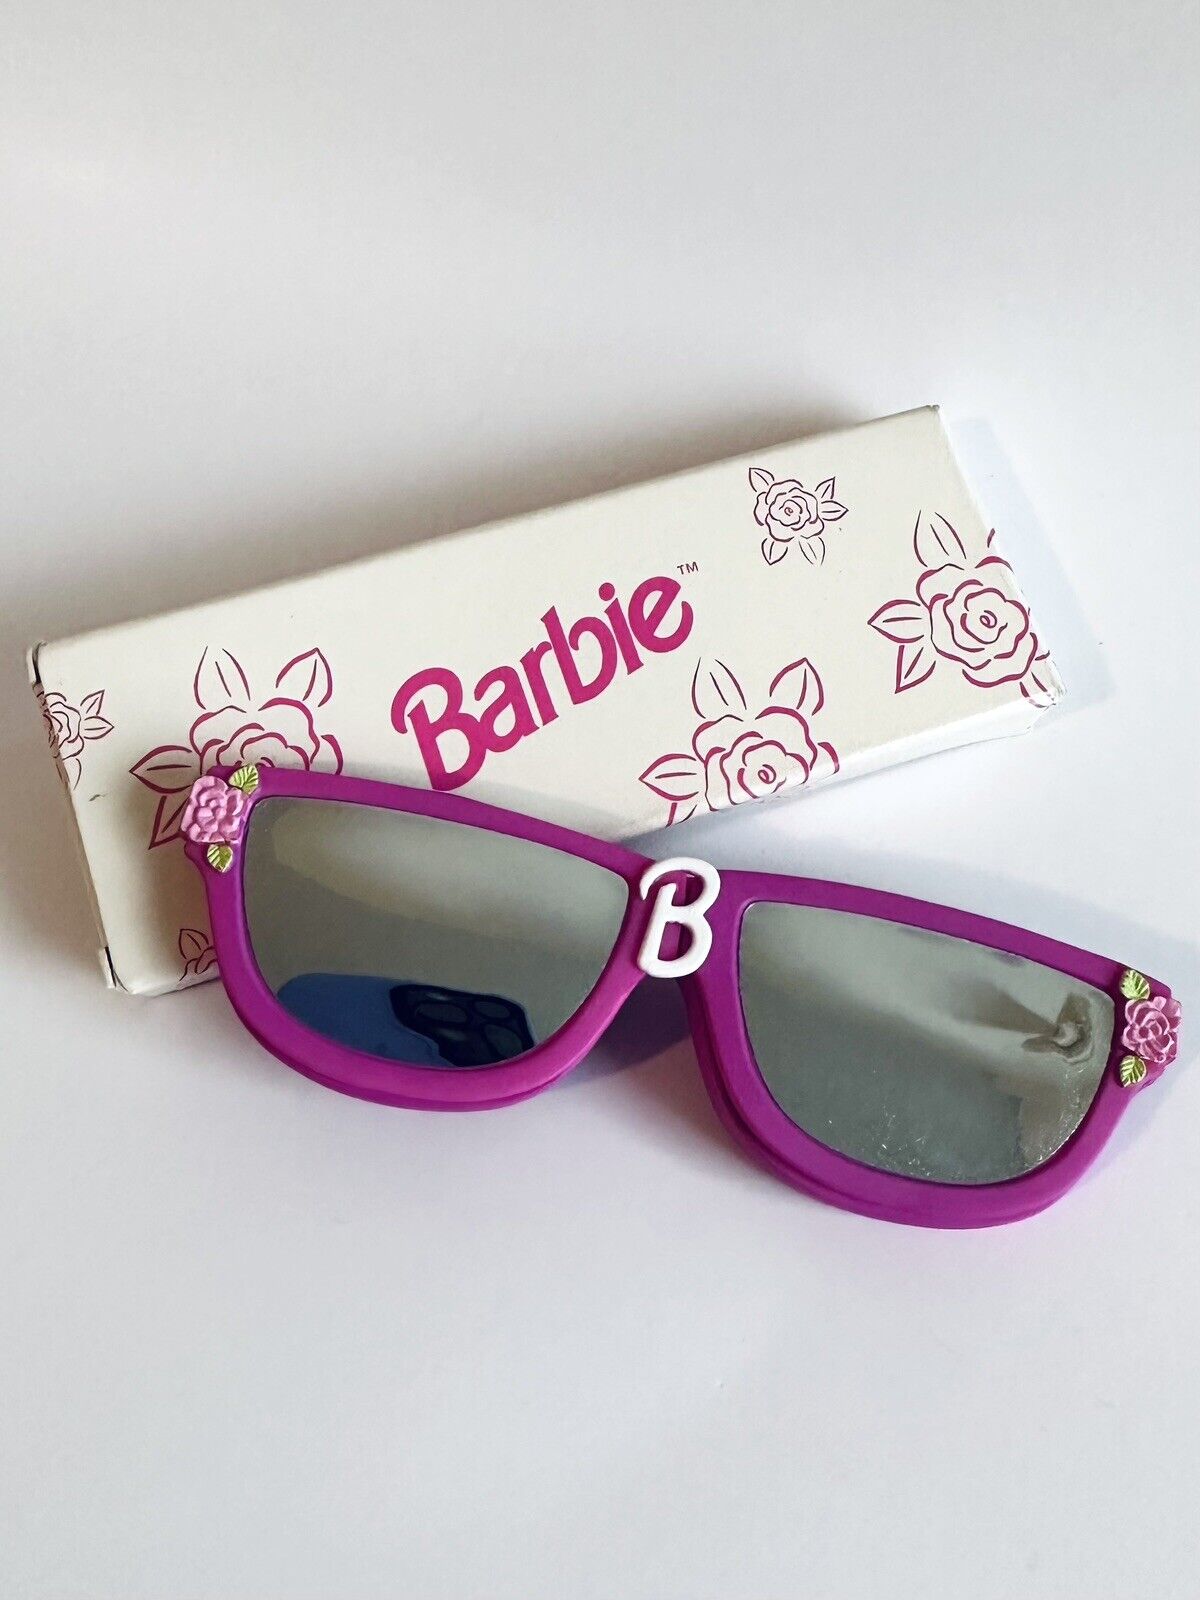 Vintage 1996 Avon Barbie Sunglasses Eyeshadow Palette New with Box